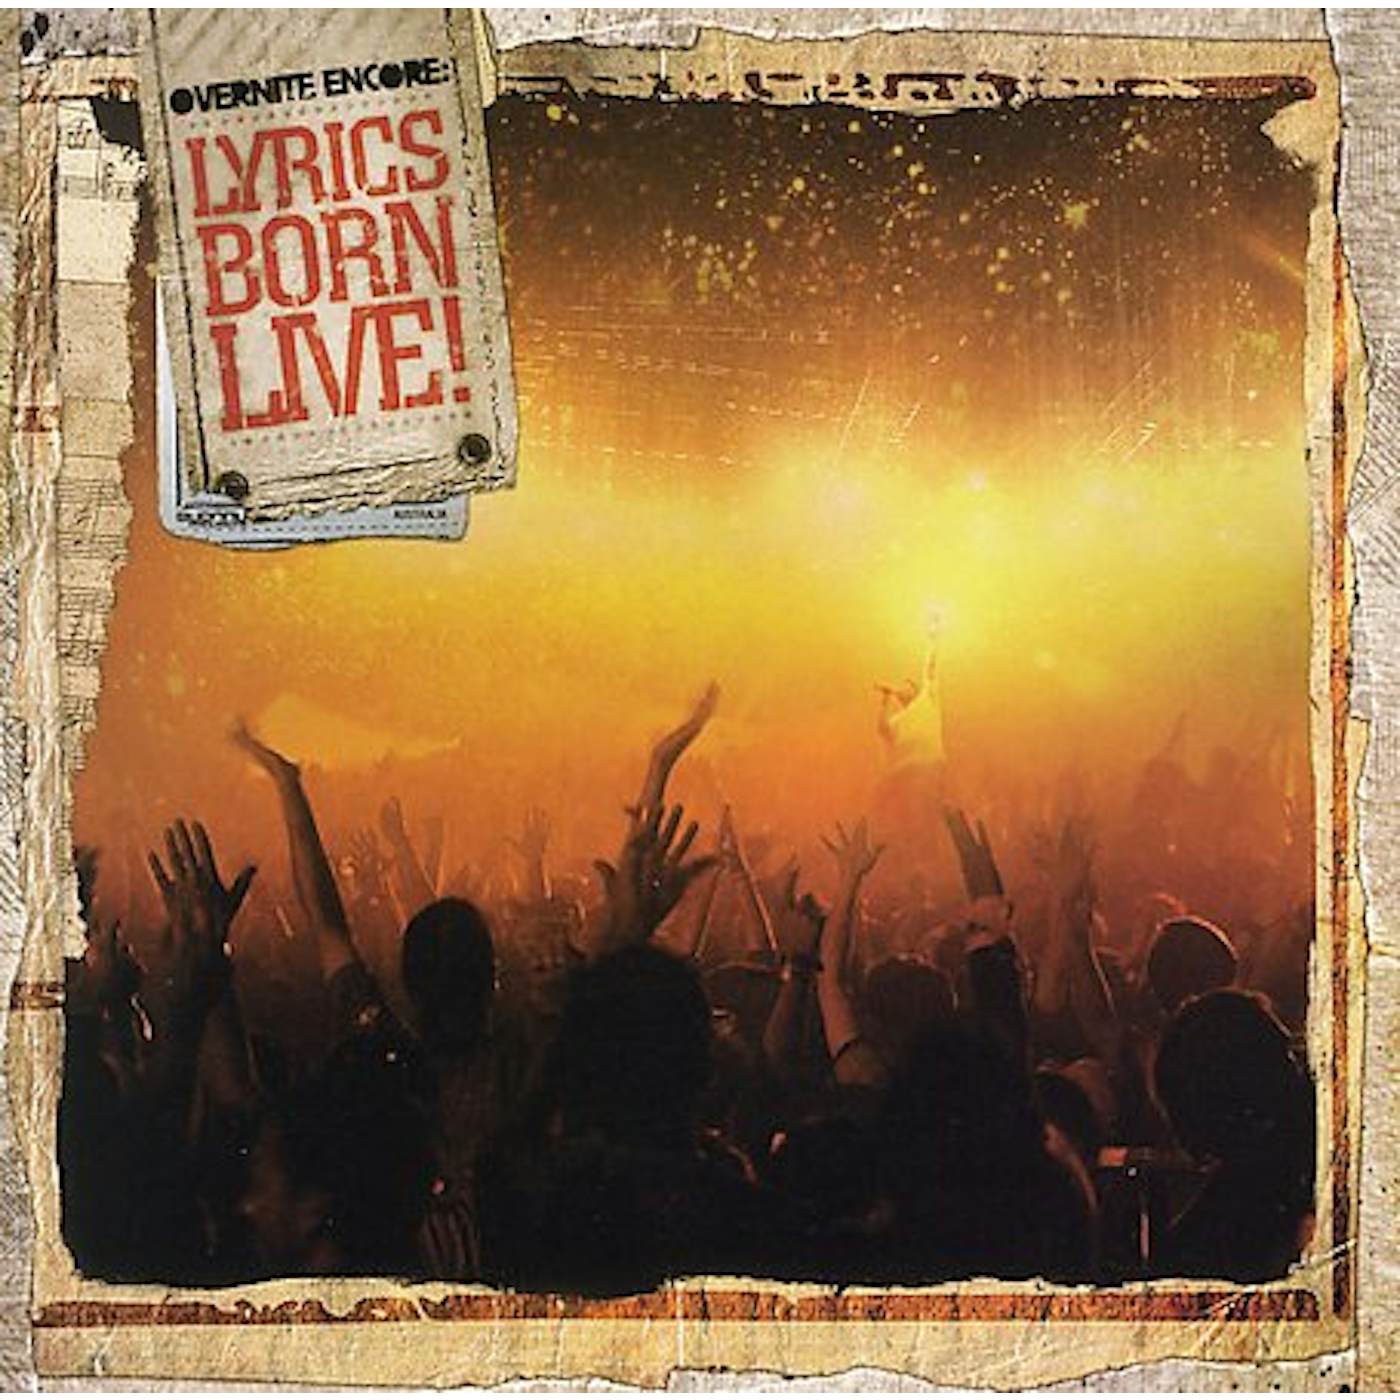 OVERNIGHT ENCORE: LYRICS BORN LIVE CD